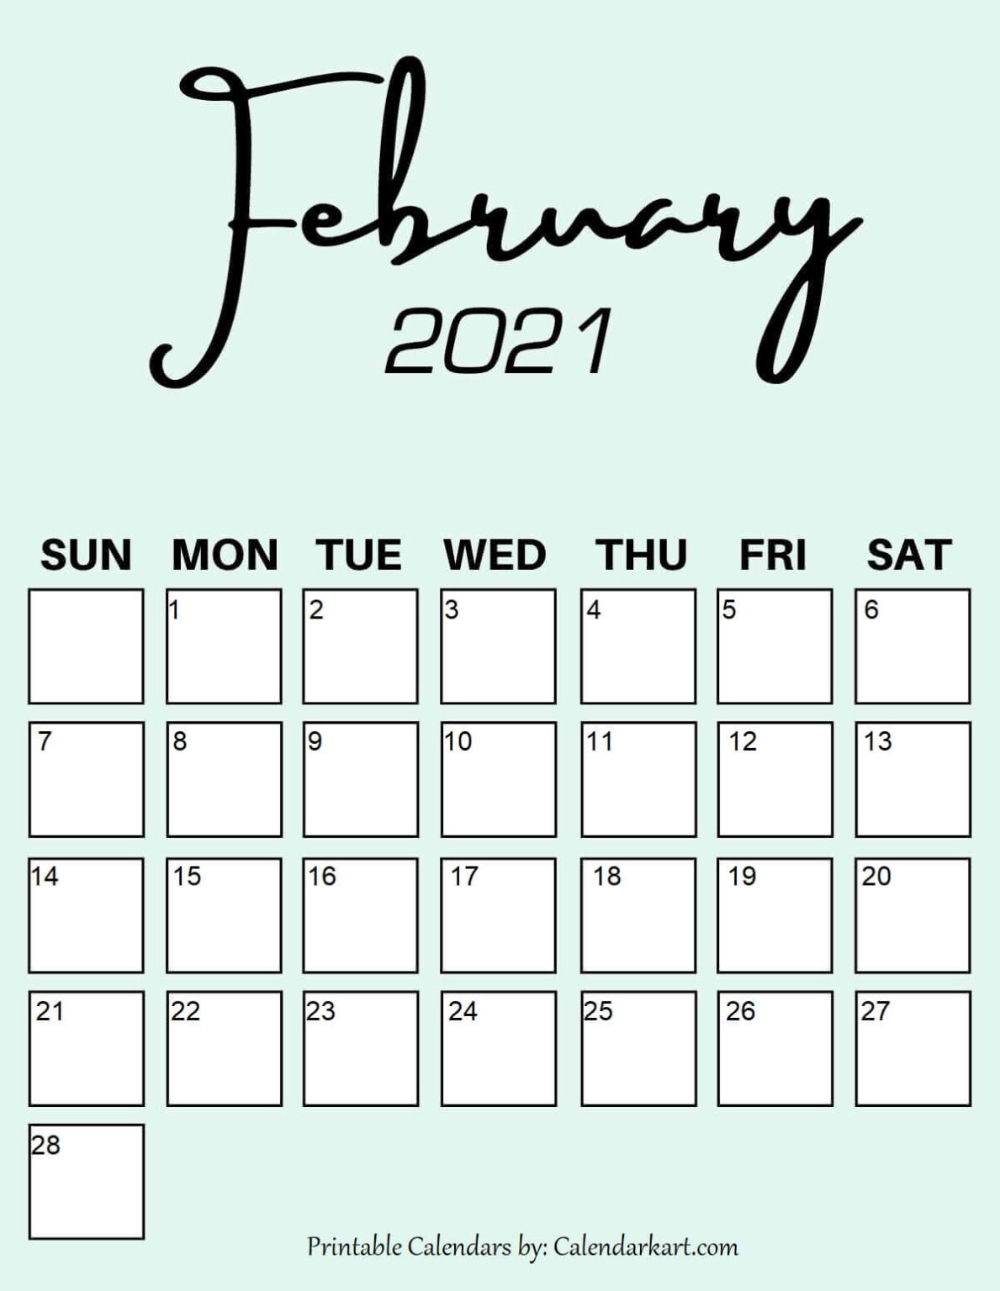 Imom Printable Calendar February 2021 | Free Printable-January February 2021 Calendar